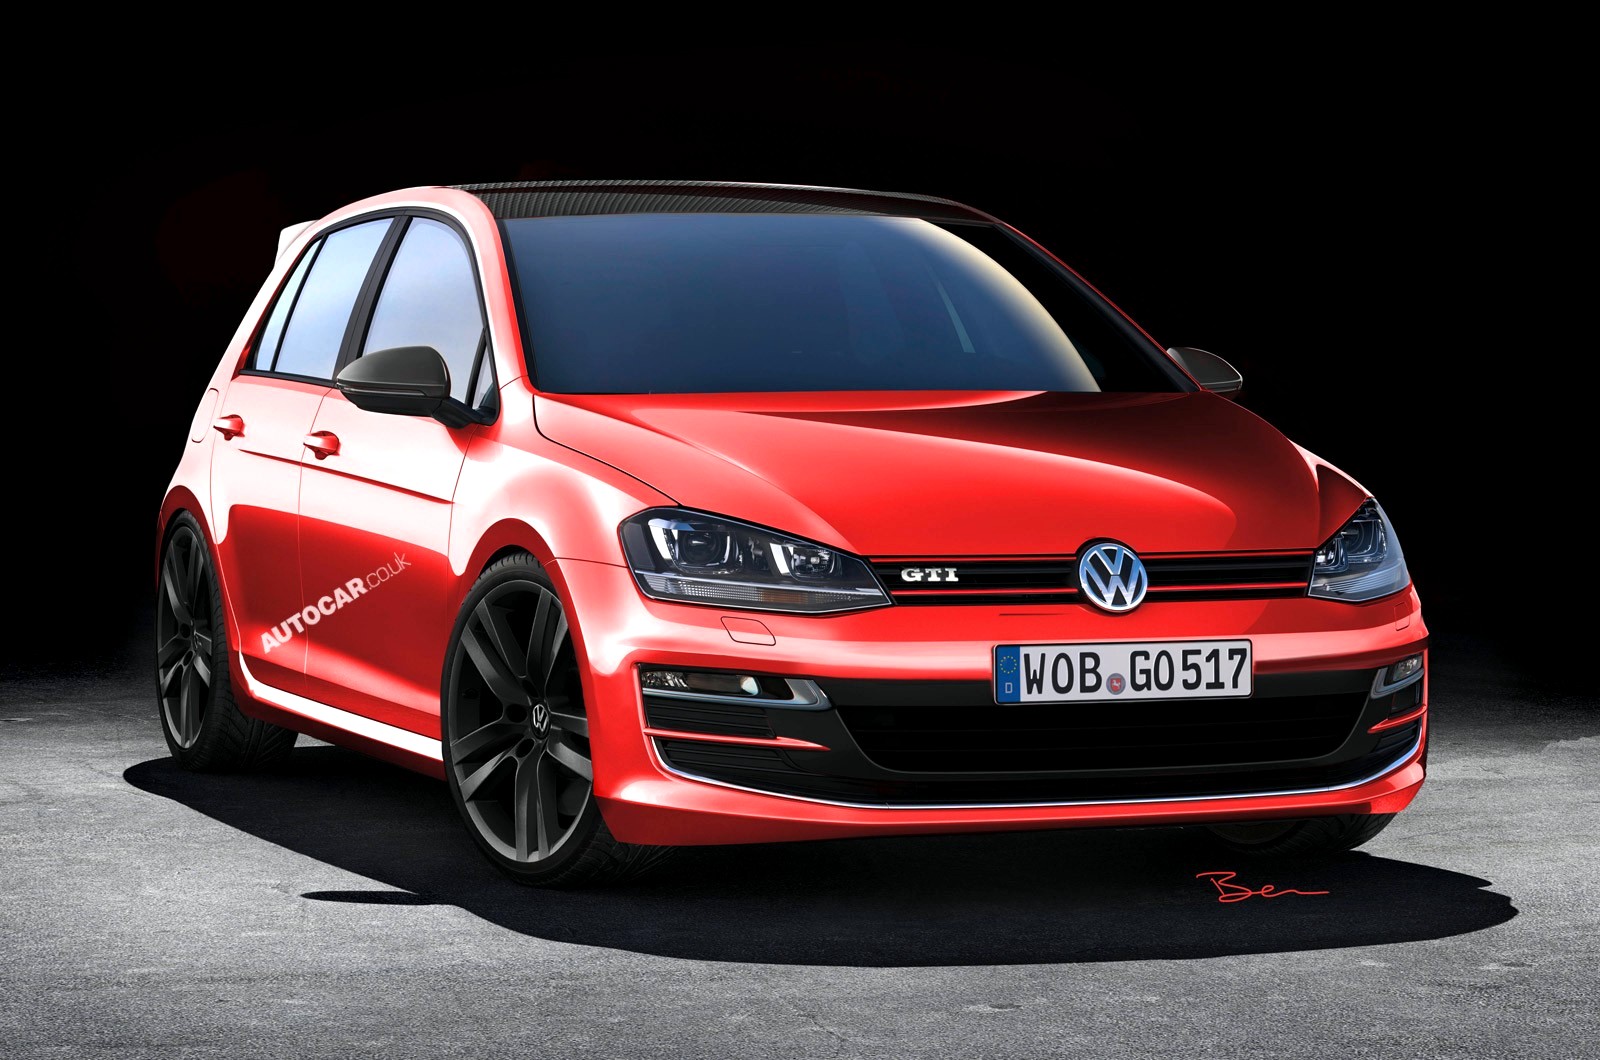 Volkswagen Golf Gti Wallpaper HD